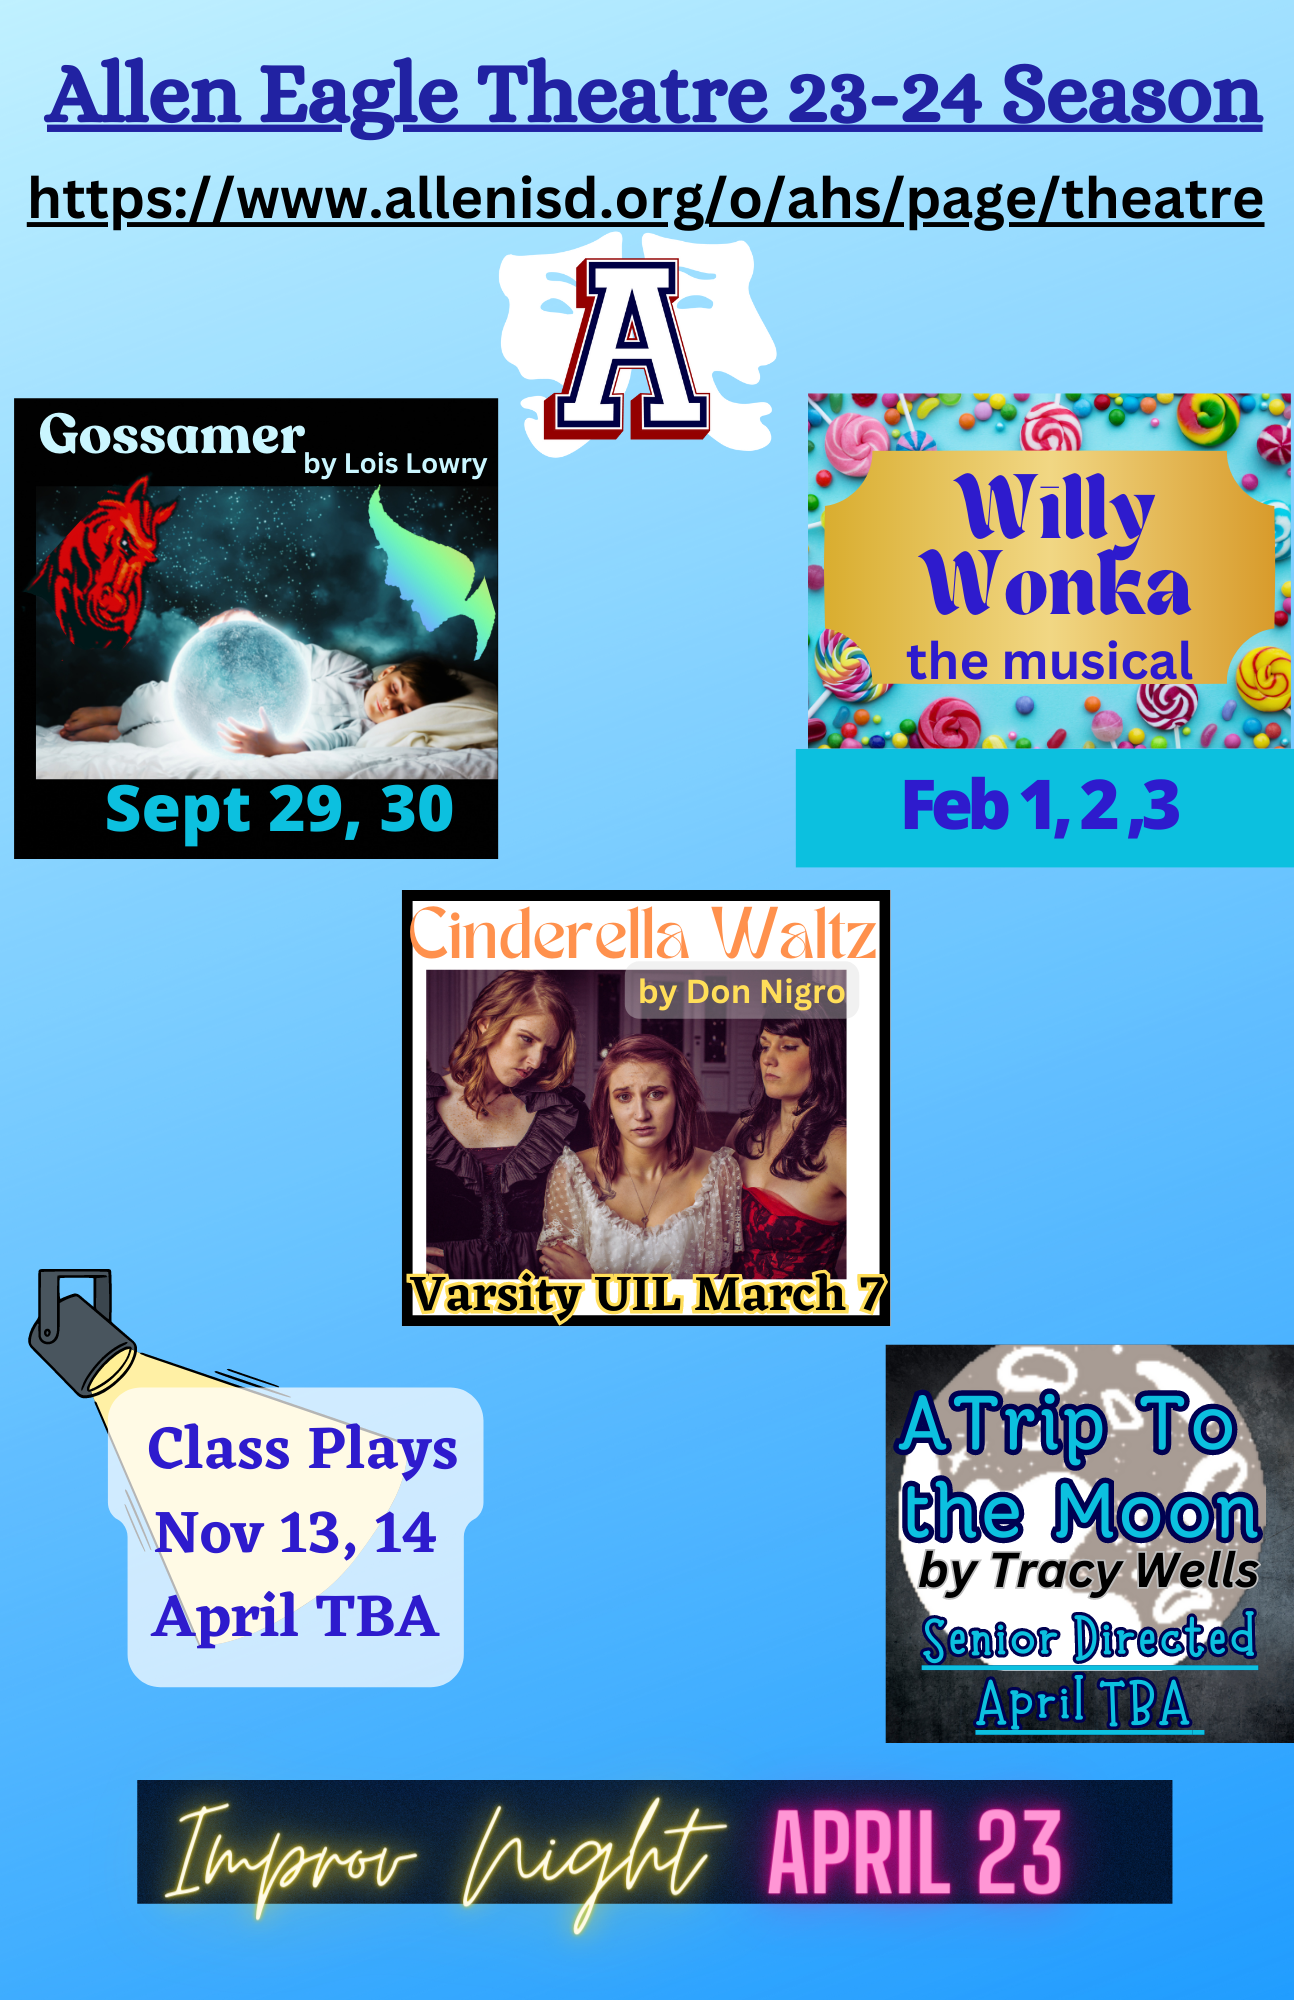 Gossamer, Sept 29, 30   Willy Wonka, Feb 1,2,3   Cinderella Waltz March 7    Class Plays Nov 13, 14 April TBA     A Trip To The Moon  April TBA   Improv  Night April 23